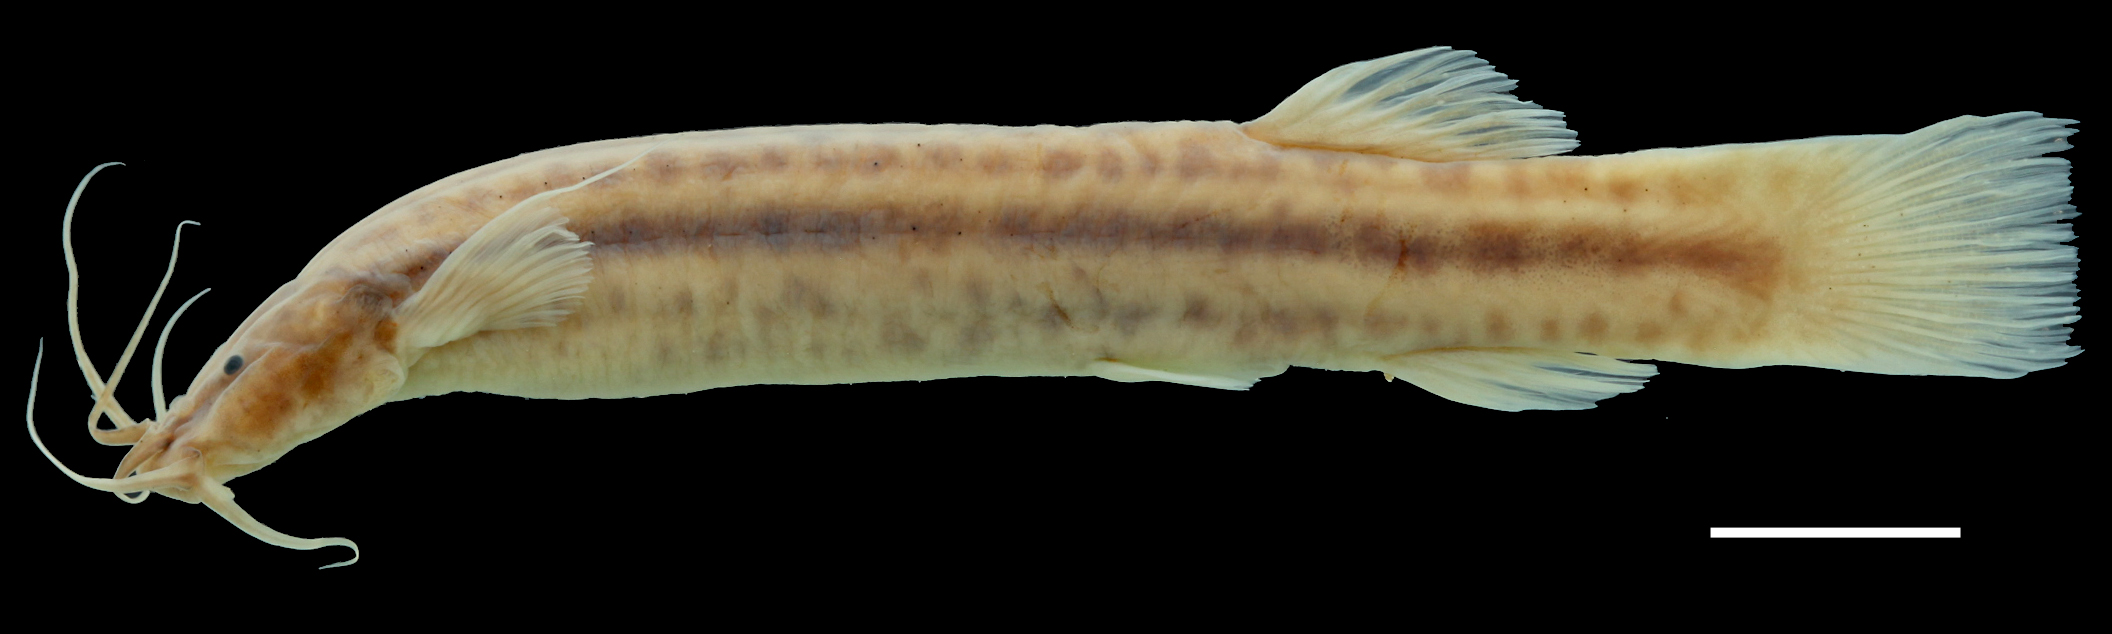 Paratype of <em>Trichomycterus ballesterosi</em>, IAvH-P-11715_Lateral, 67.5 mm SL (scale bar = 1 cm). Photograph by C. DoNascimiento